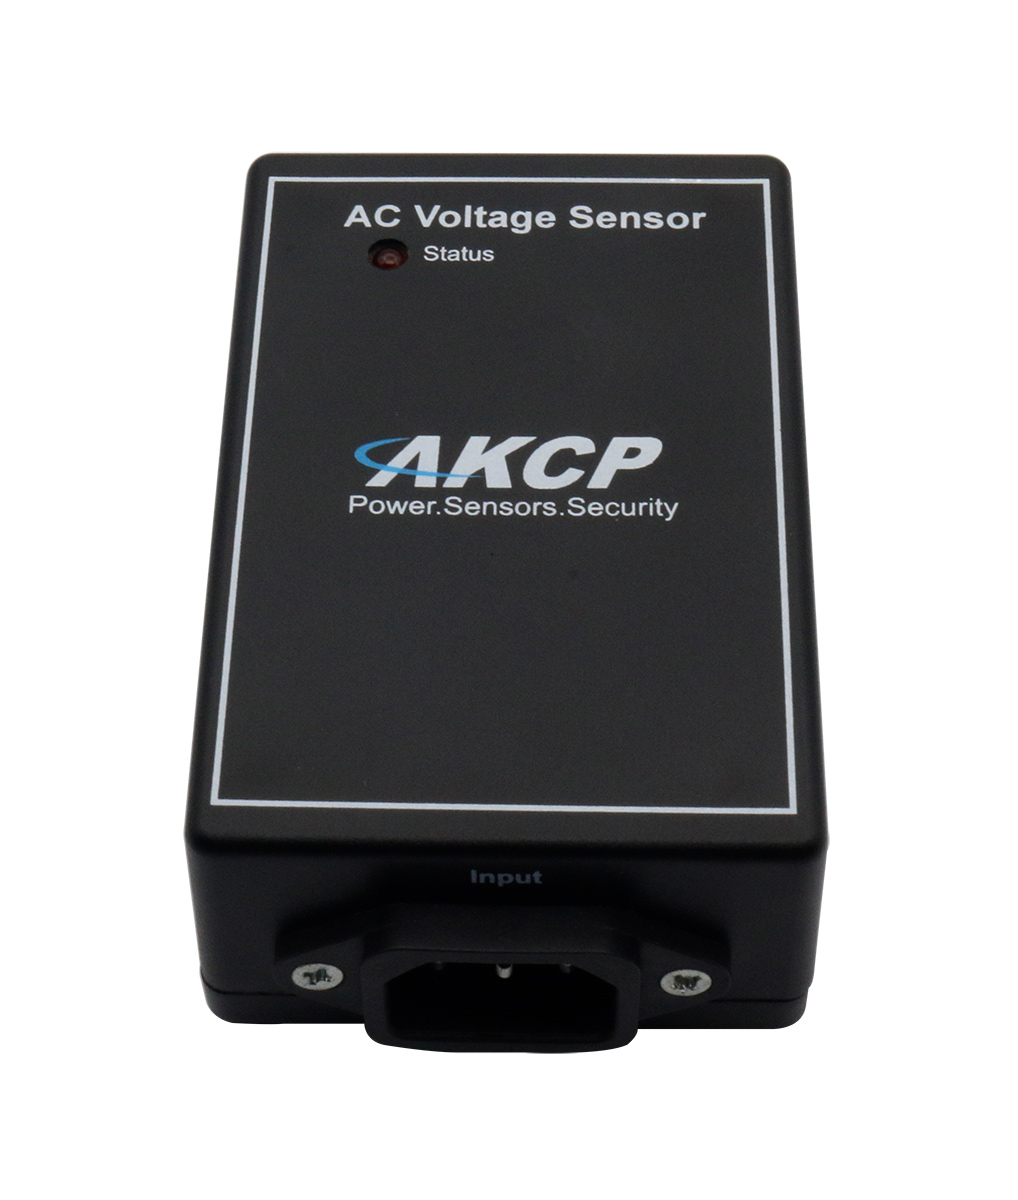 AKCP - ACV60 - AC Voltage Sensor